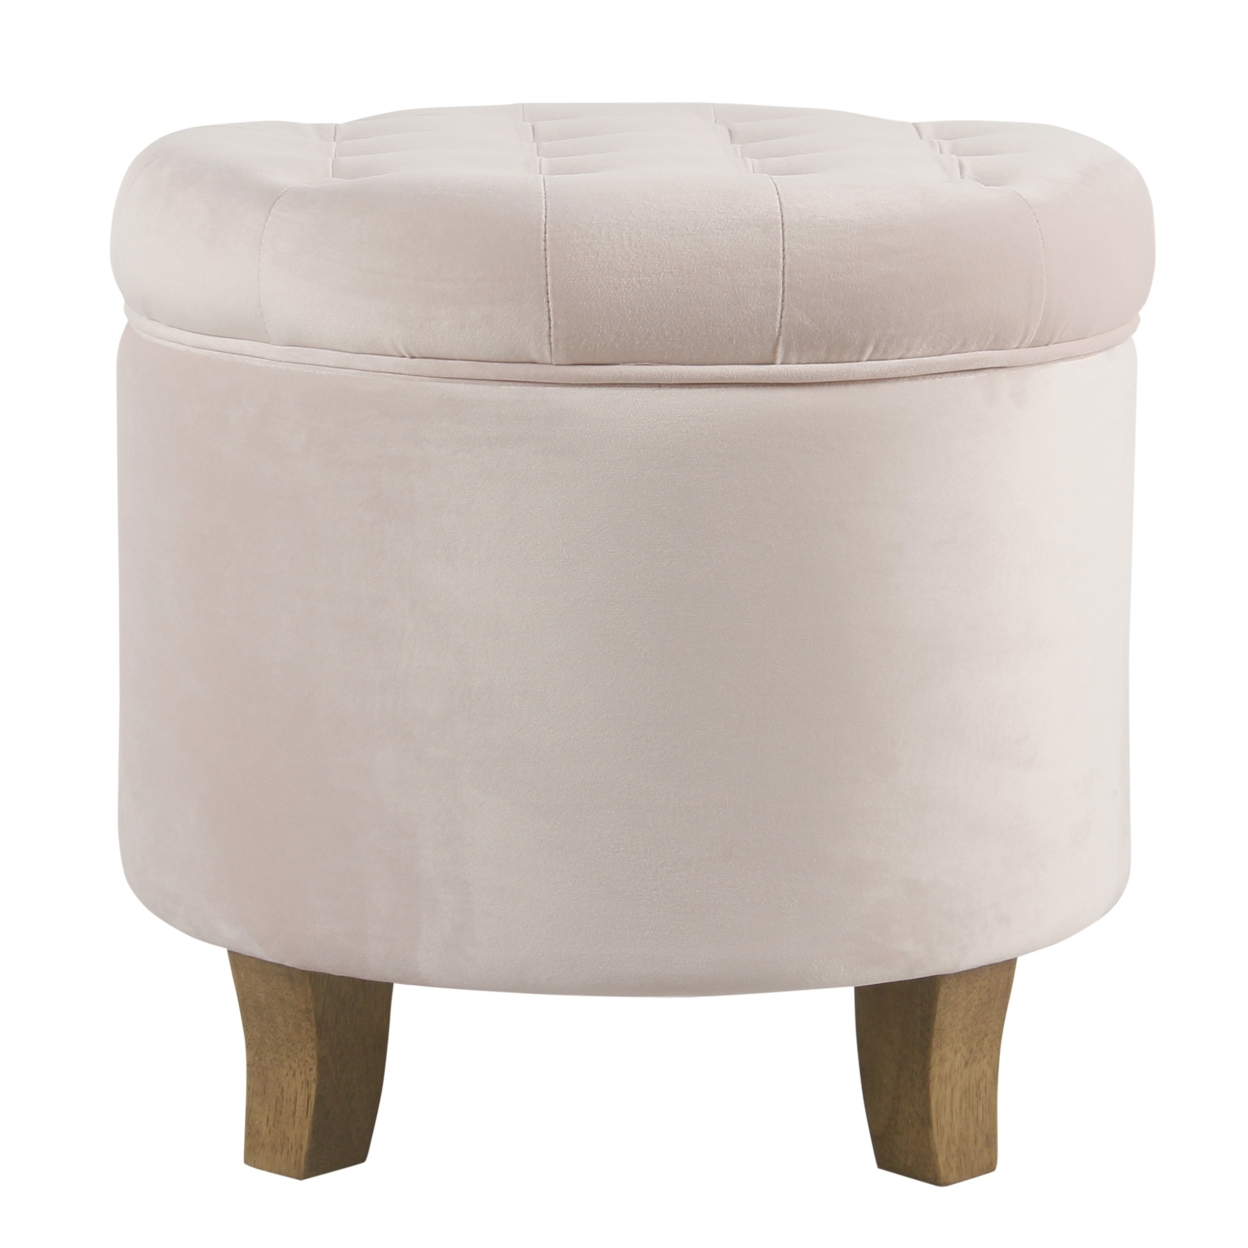 Button Tufted Velvet Upholstered Wooden Ottoman With Hidden Storage, Light Pink And Brown- Saltoro Sherpi